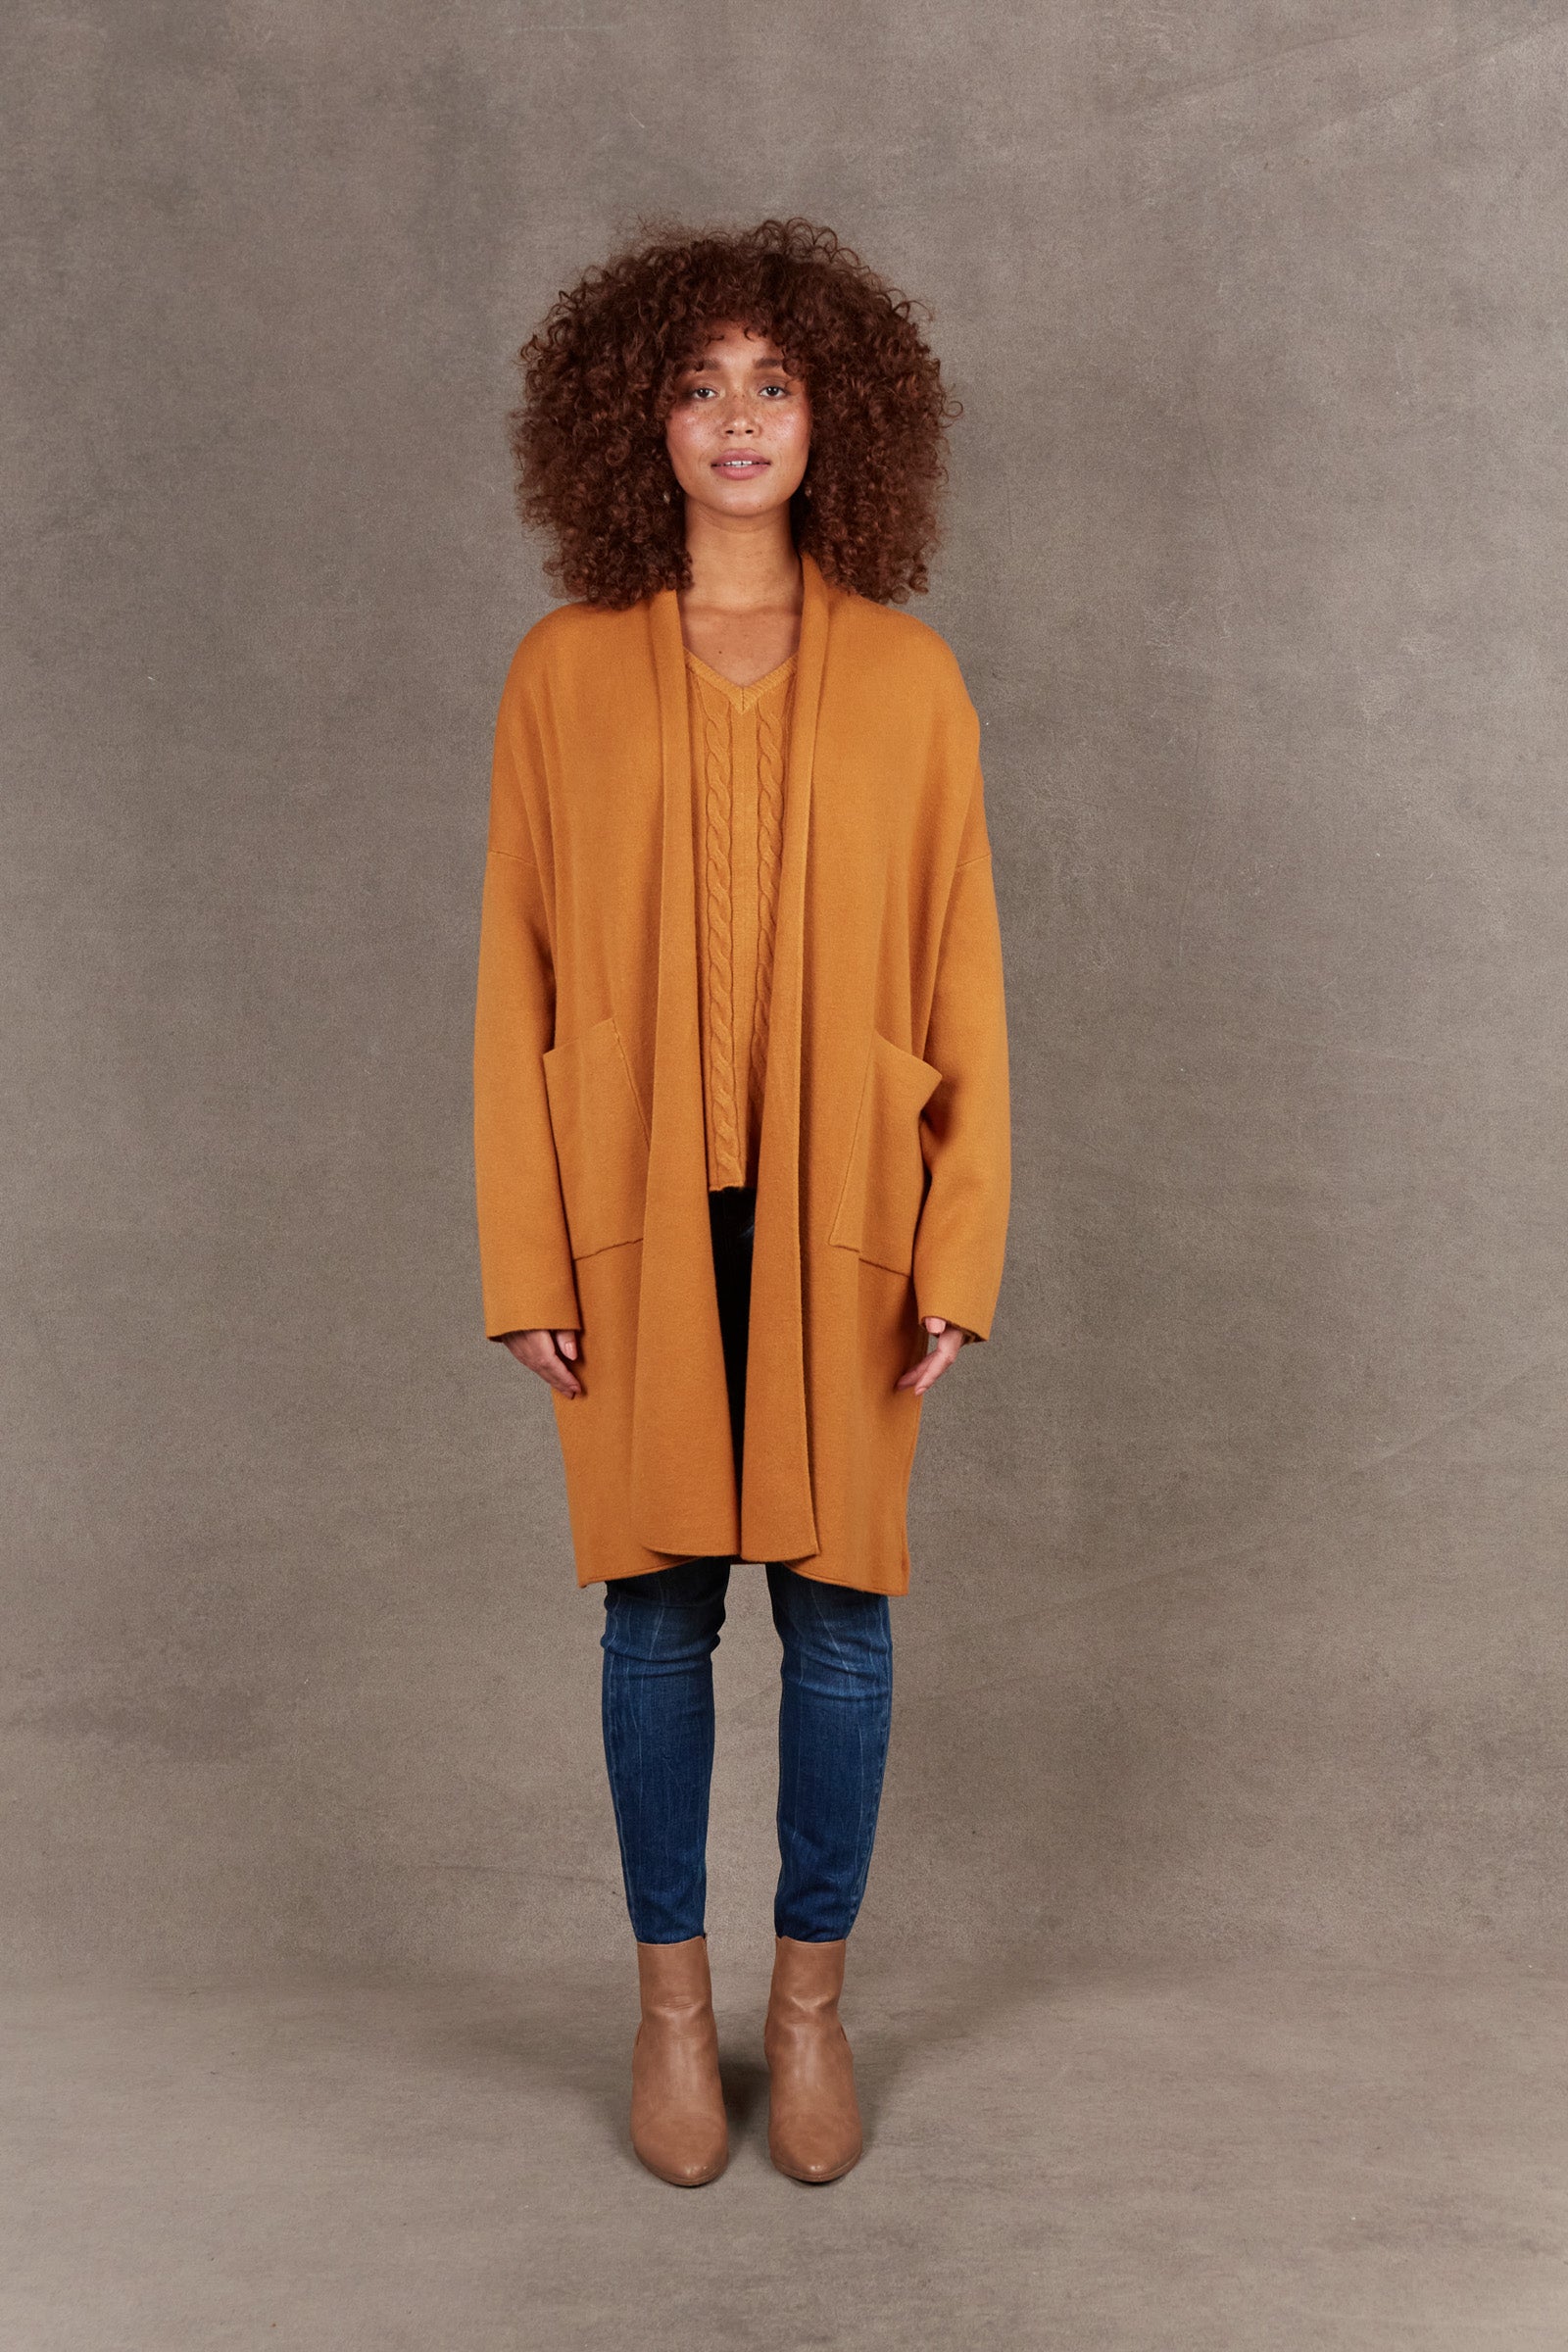 Alawa Cardigan - Ochre - eb&ive Clothing - Knit Cardigan Long One Size